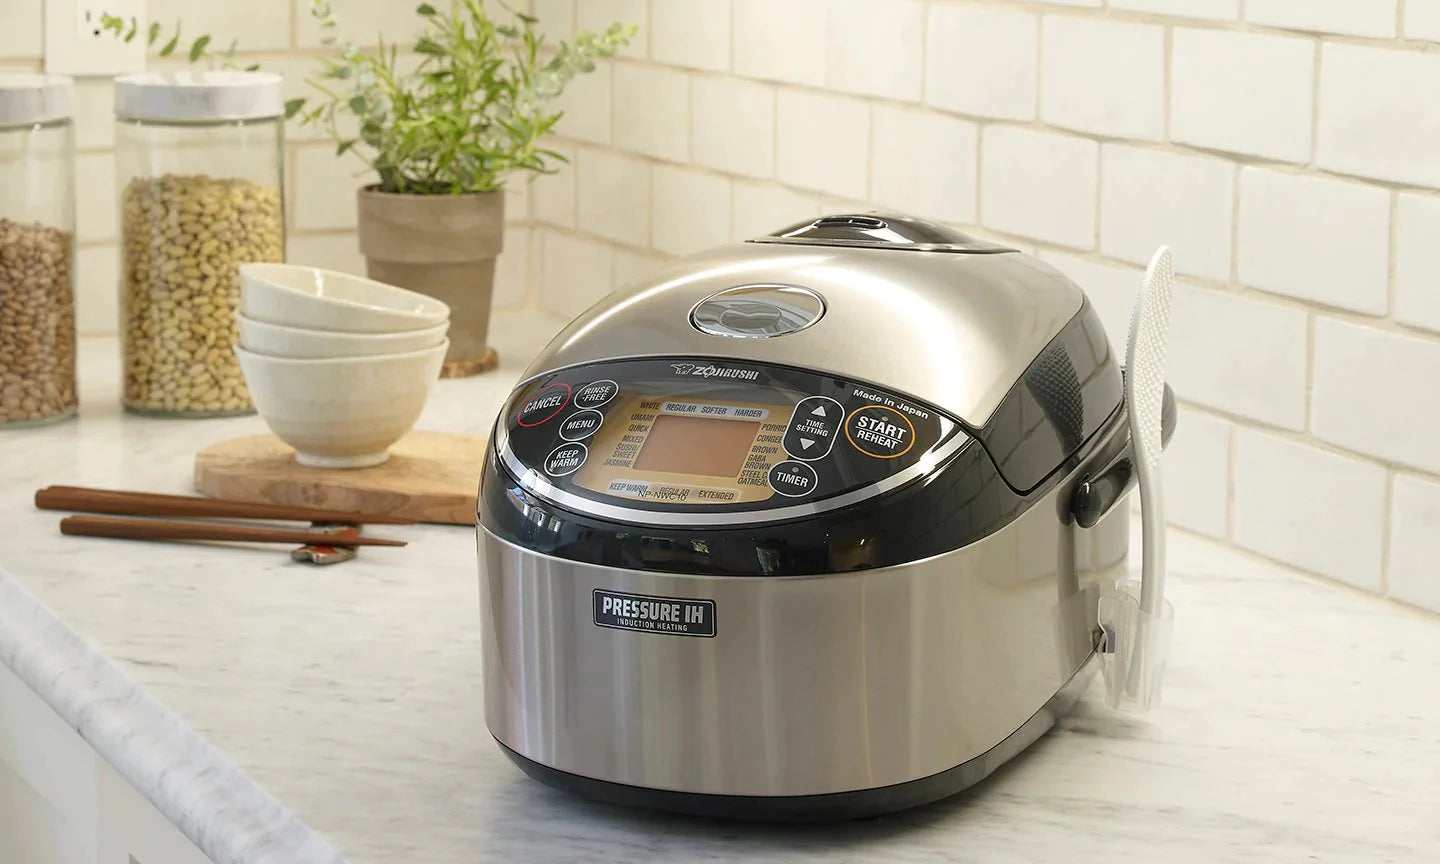 Micom Rice Cooker & Warmer NS-LAC05 – Zojirushi Online Store